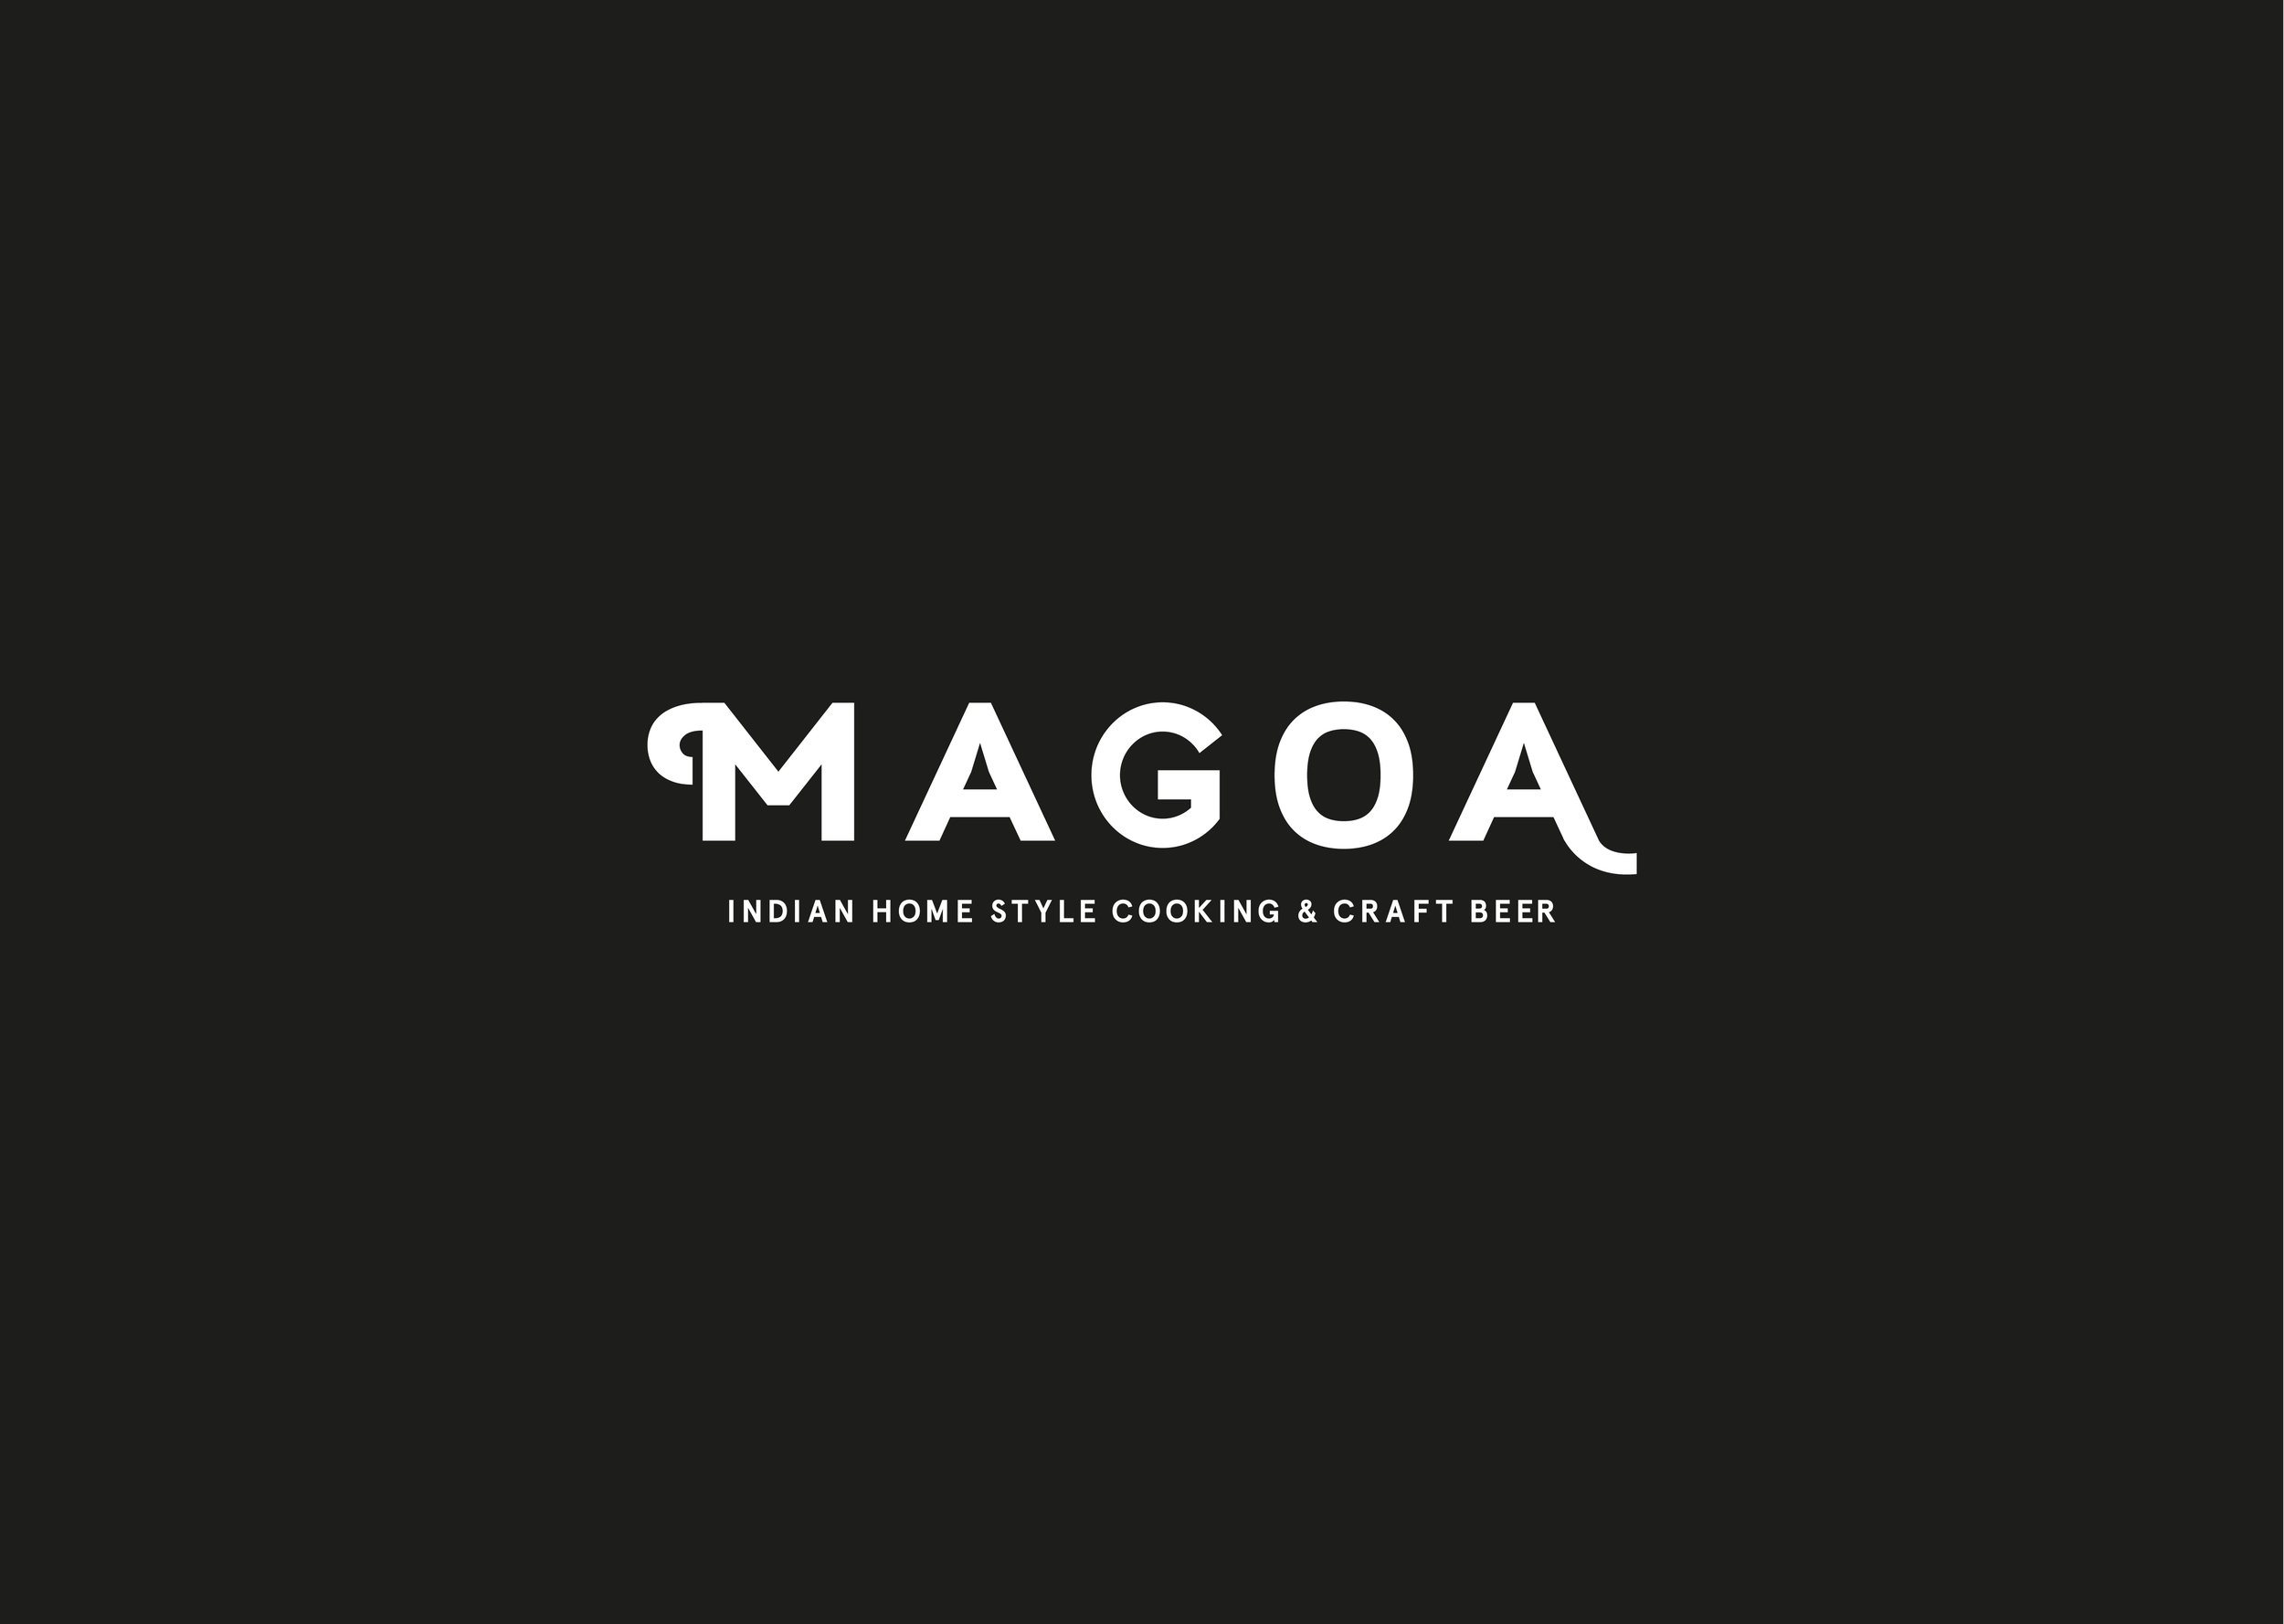 Freelance-graphic-designer-Magoa company font logo in black background